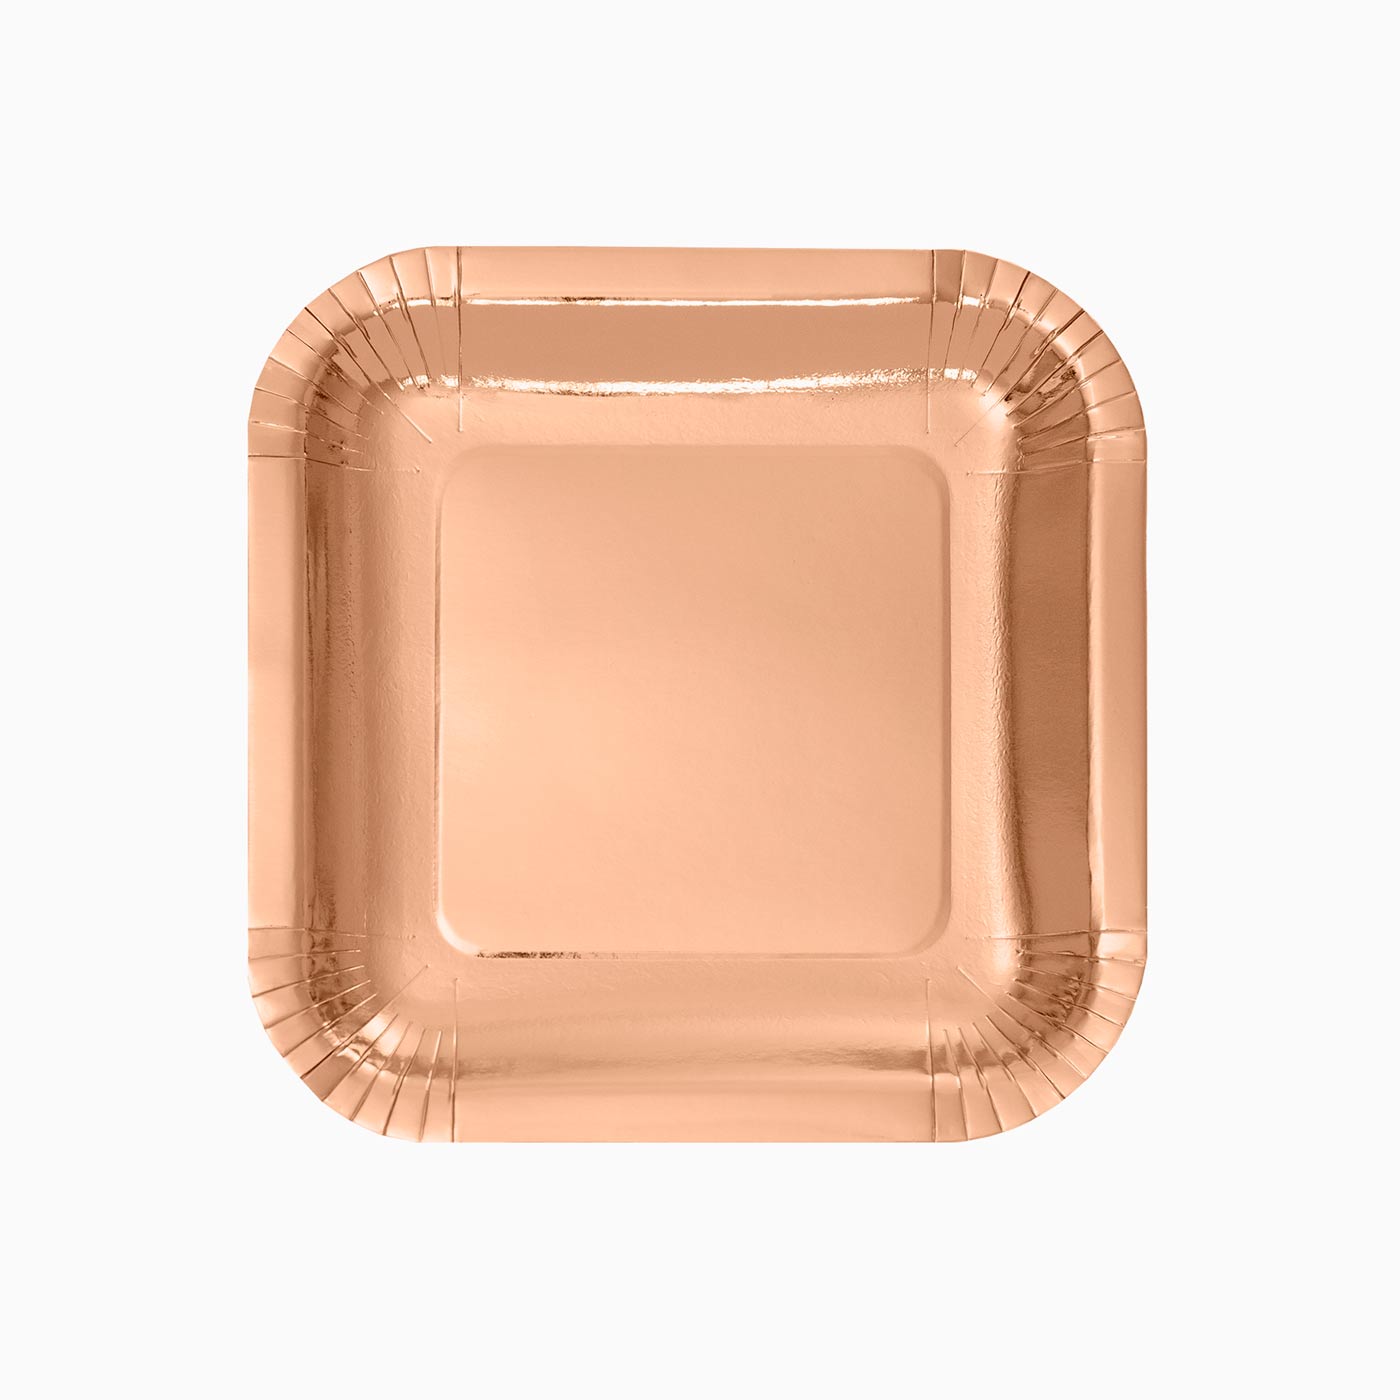 Metallized Plain Carton Platon 18 x 18 cm de ouro rosa